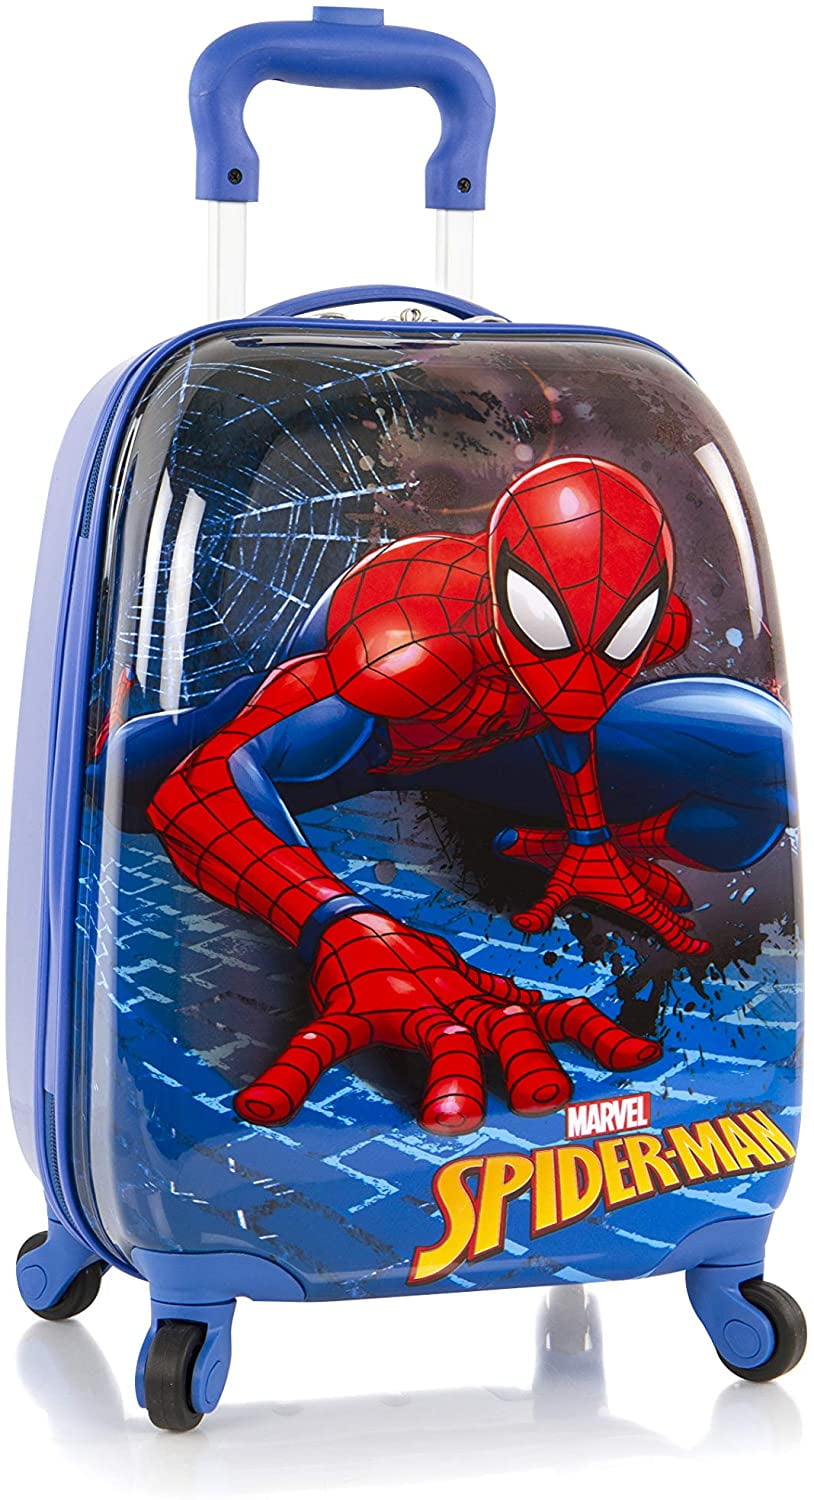 2 Wheels Marvel Spiderman Rolling Luggage Case